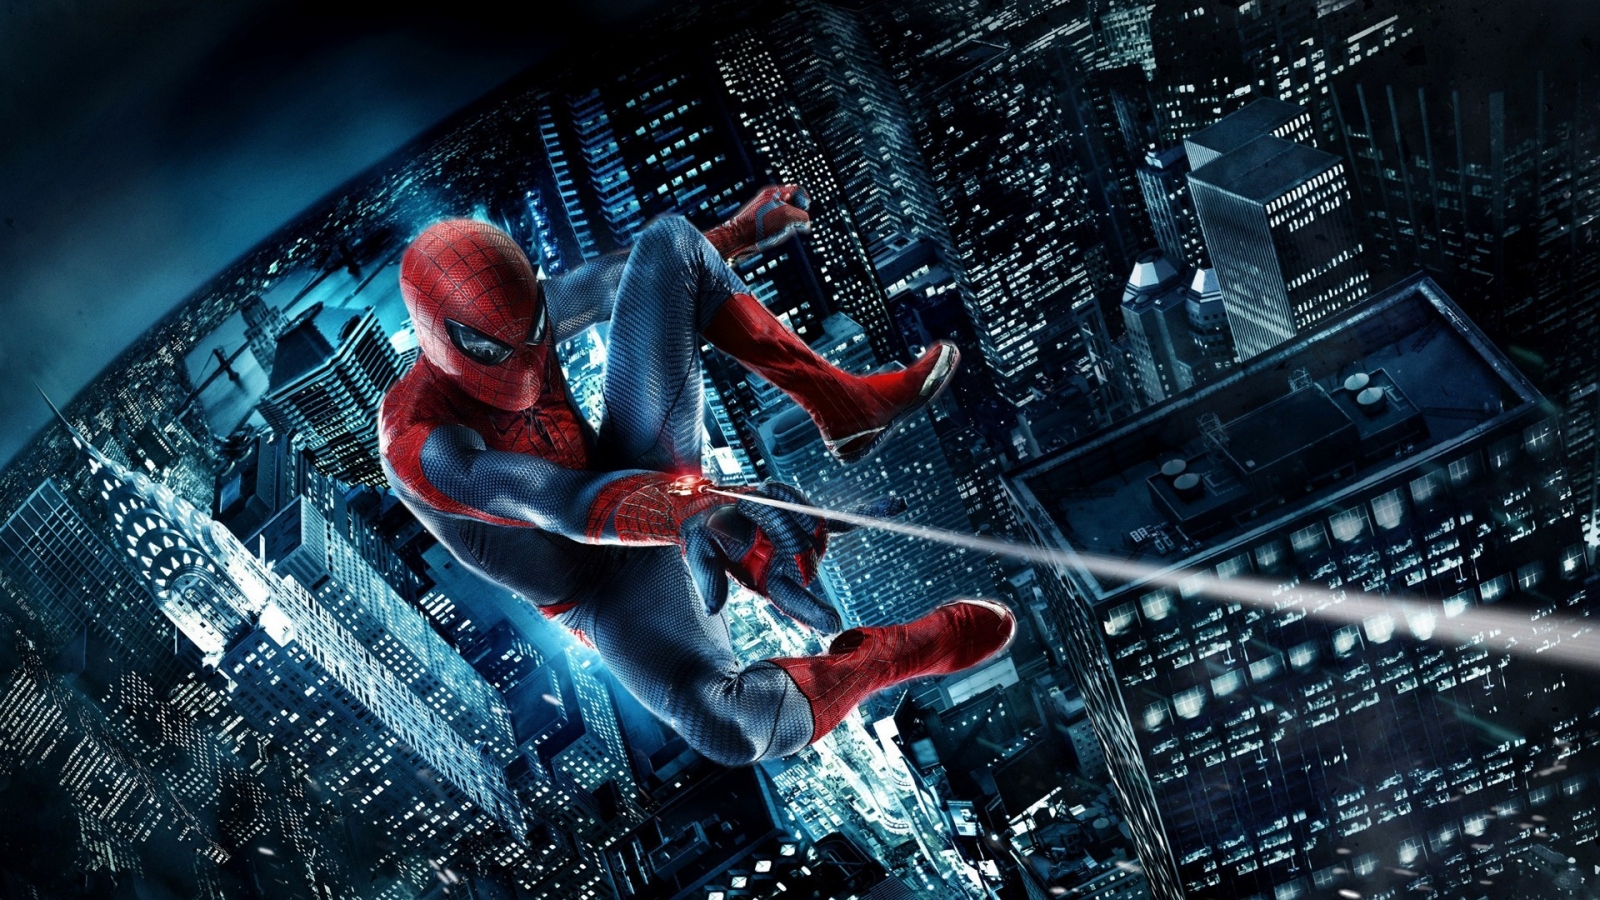 The Amazing SpiderMan 2 1600 x 900 HDTV Wallpaper